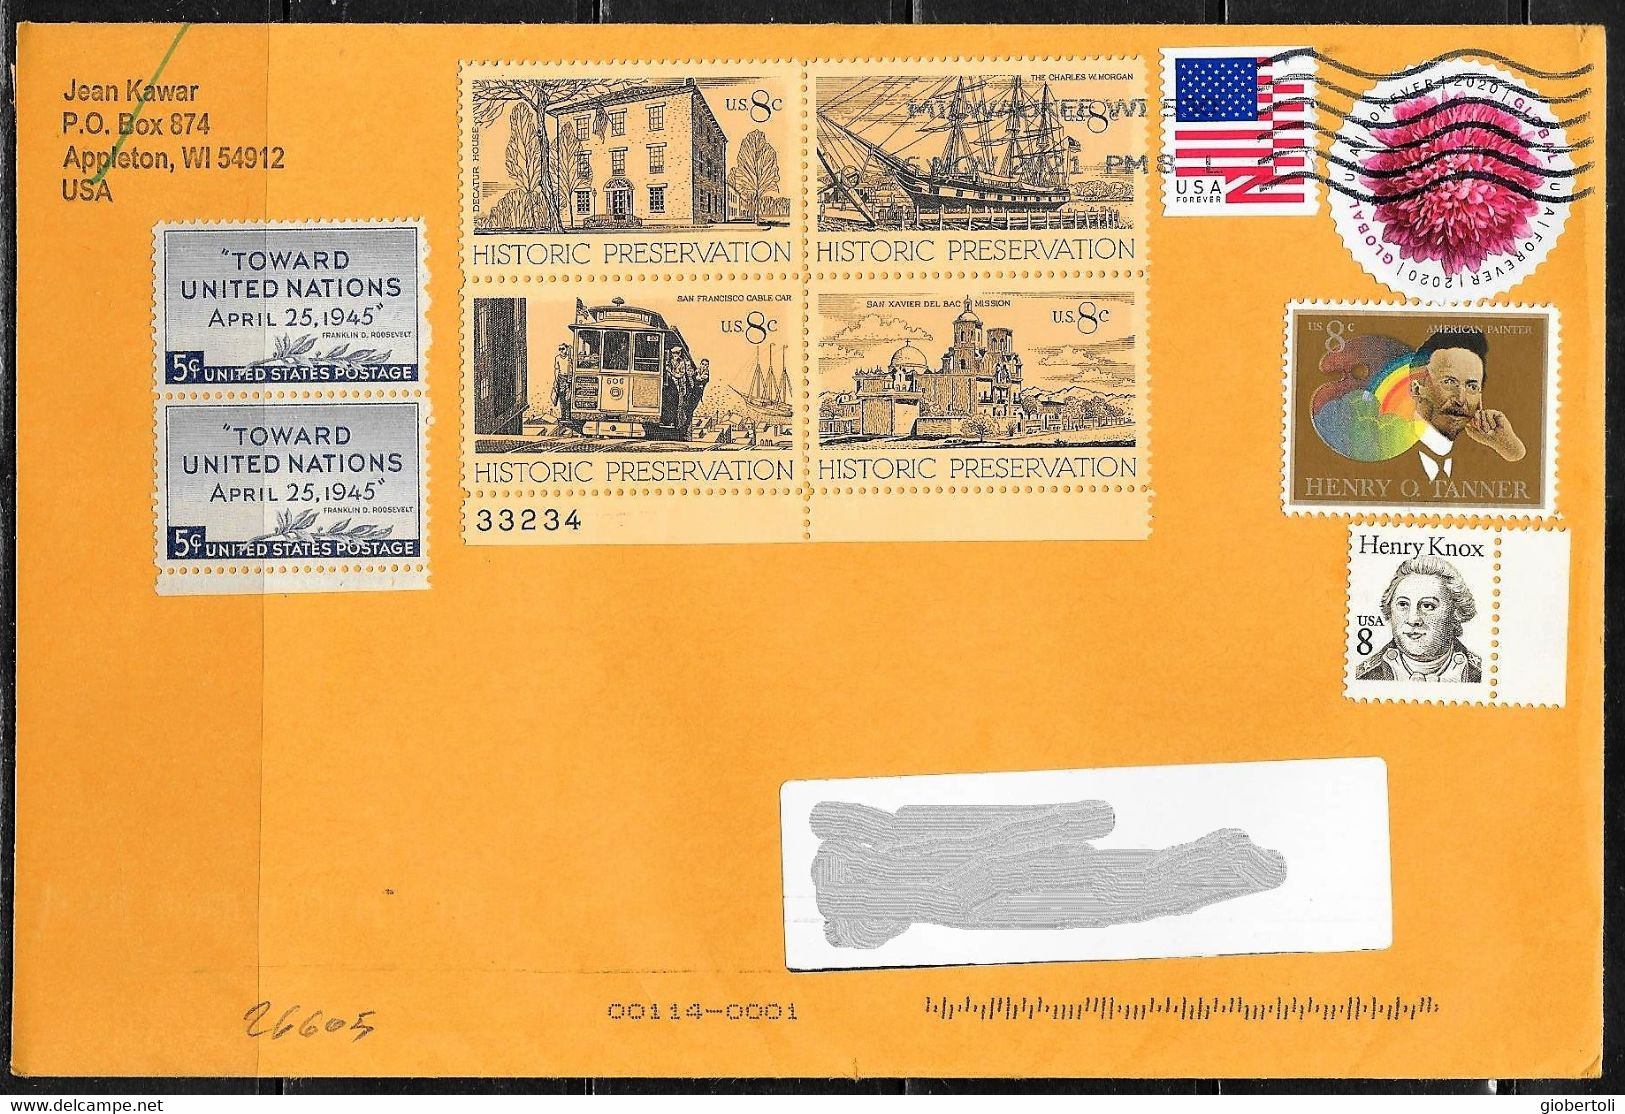 Stati Uniti/United States/États Unis: Lettera, Letter, Lettre - Covers & Documents